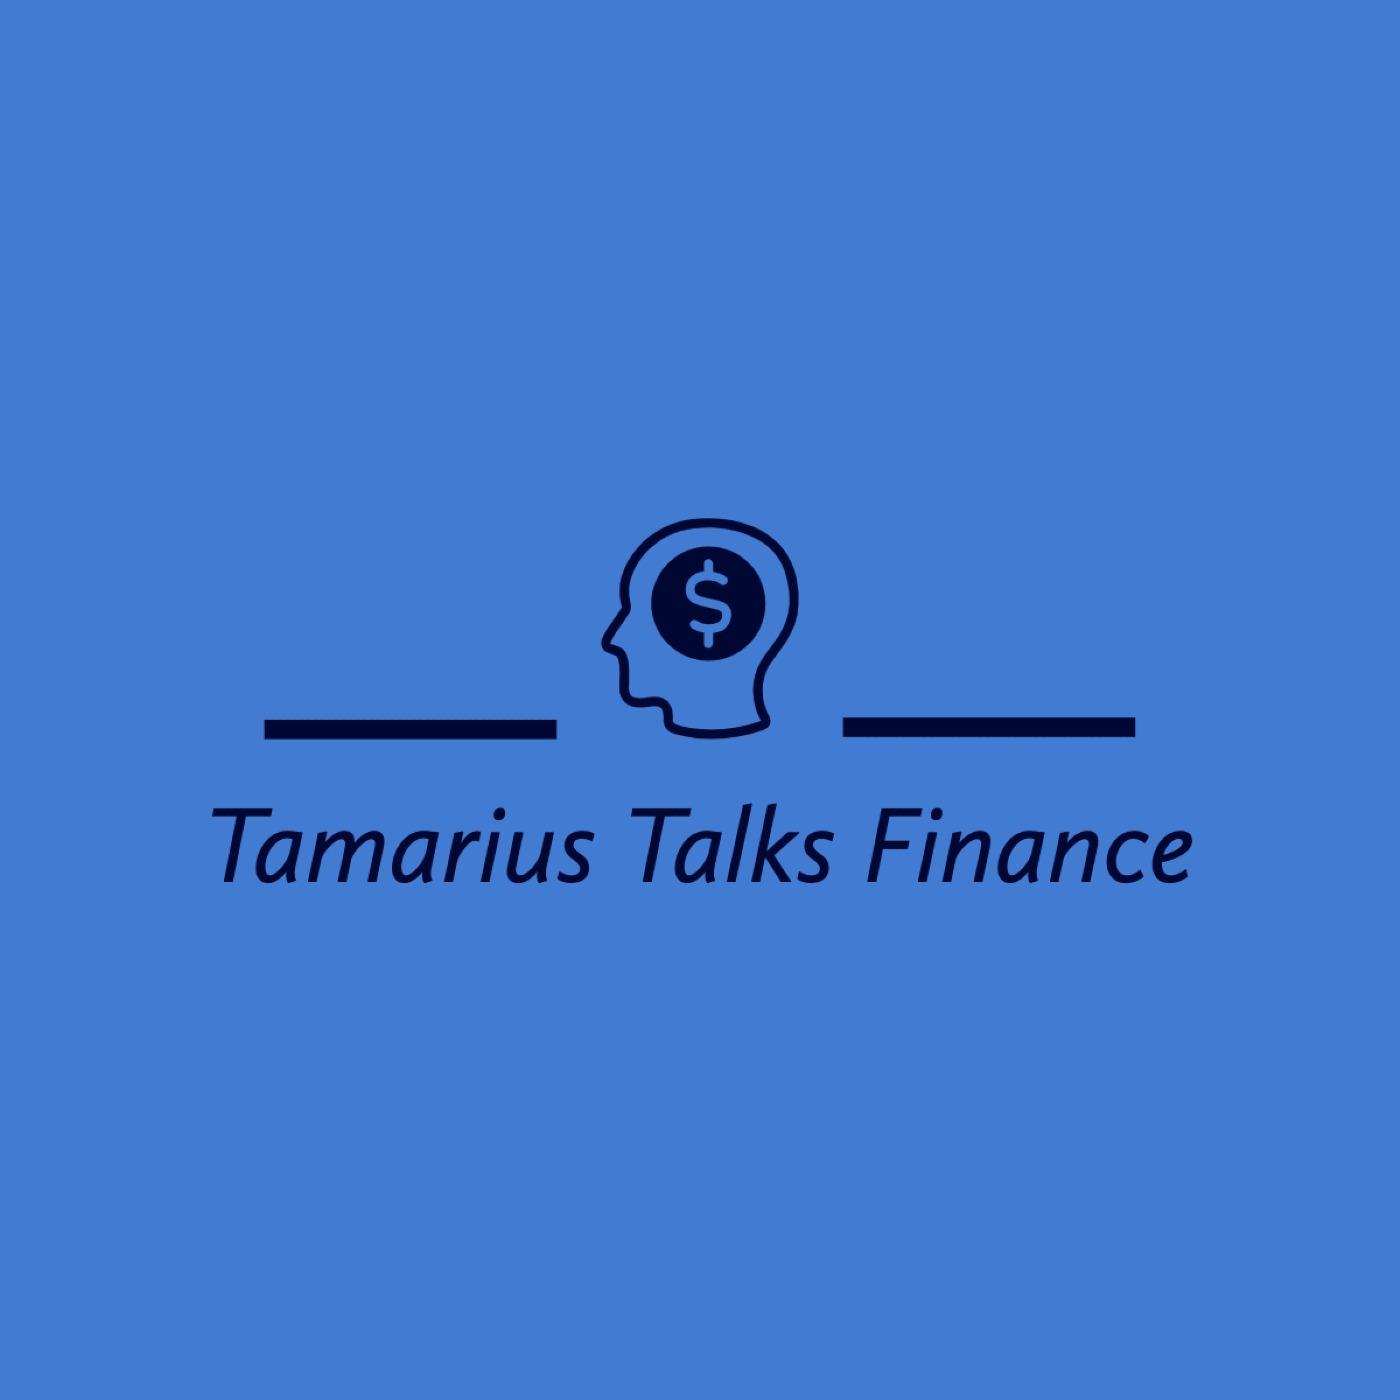 Tamarius Talks Finance